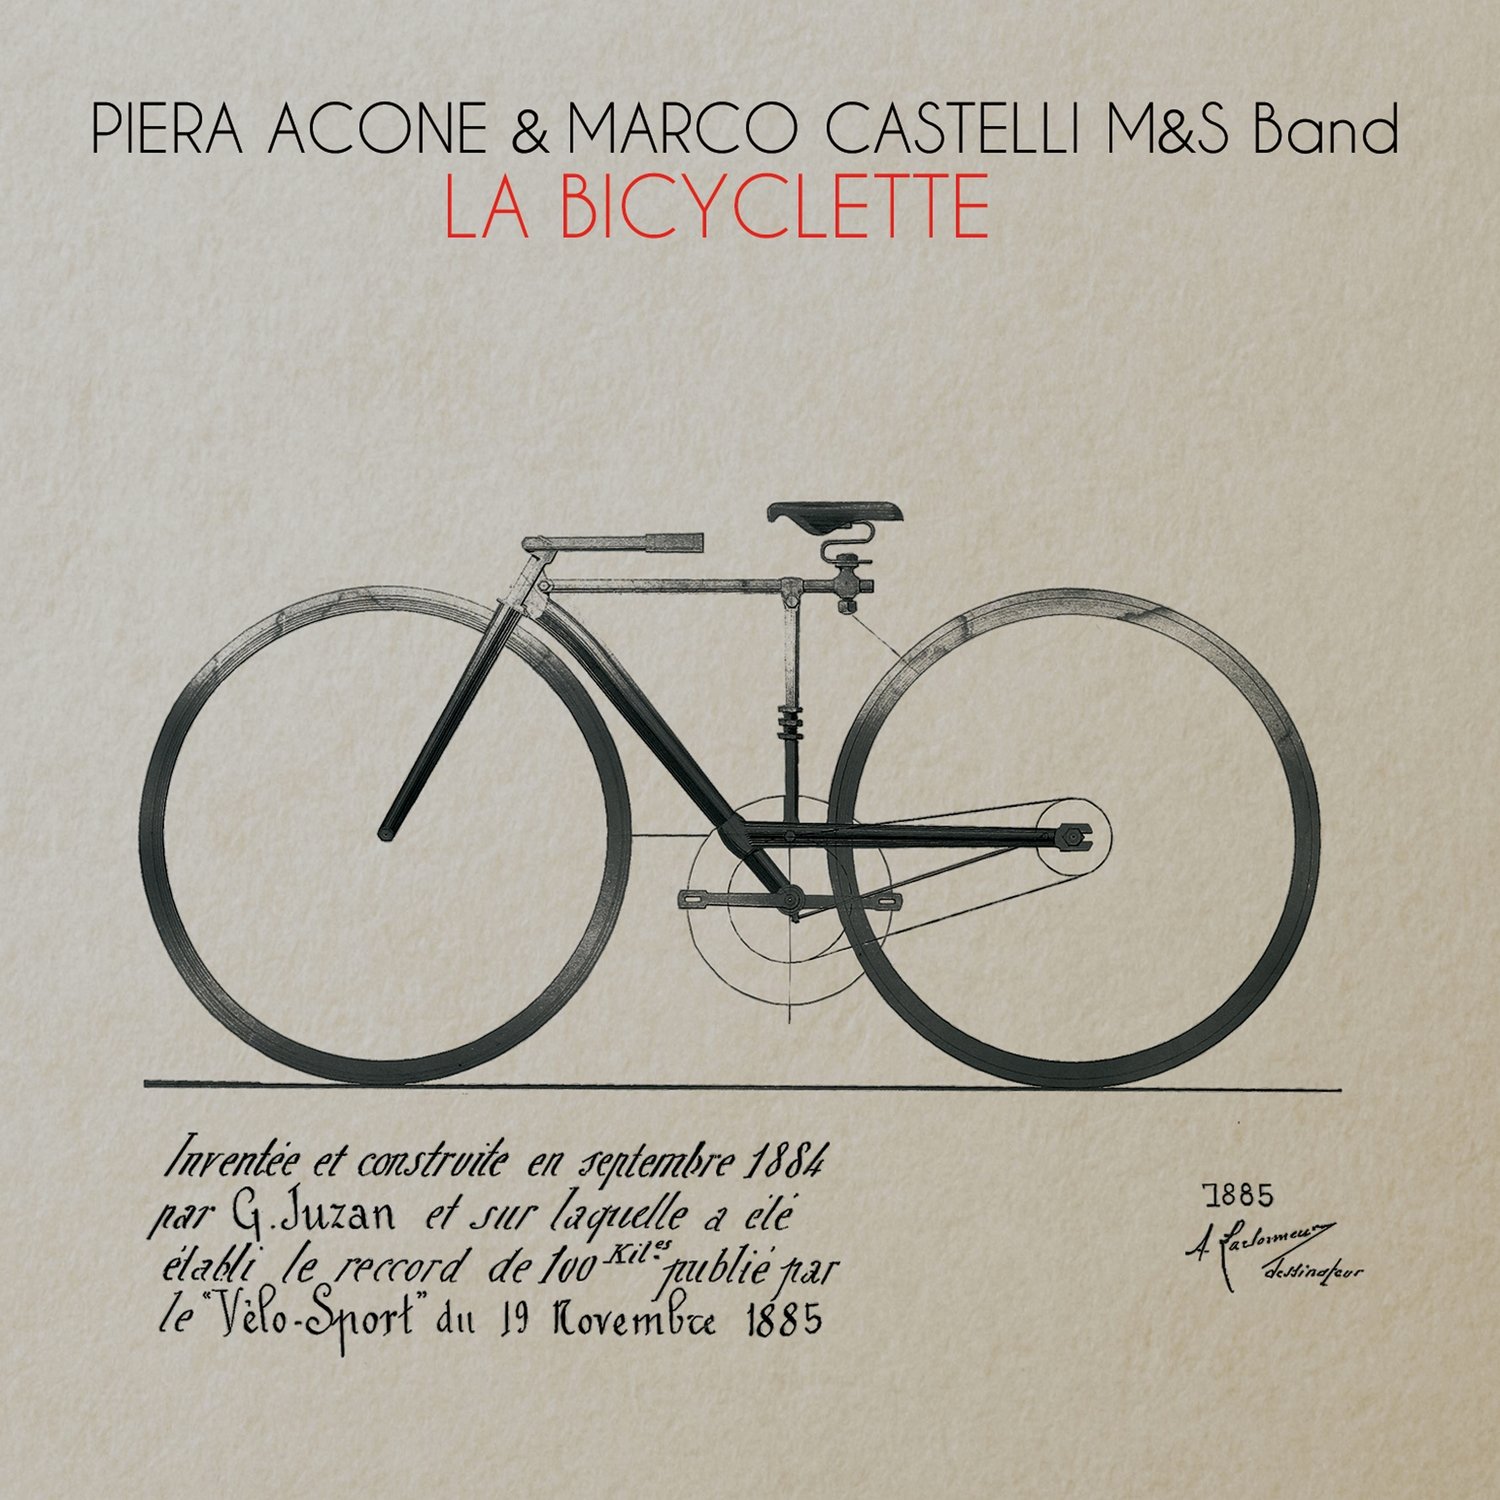 PIERA ACONE & MARCO CASTELLI “La bicyclette”